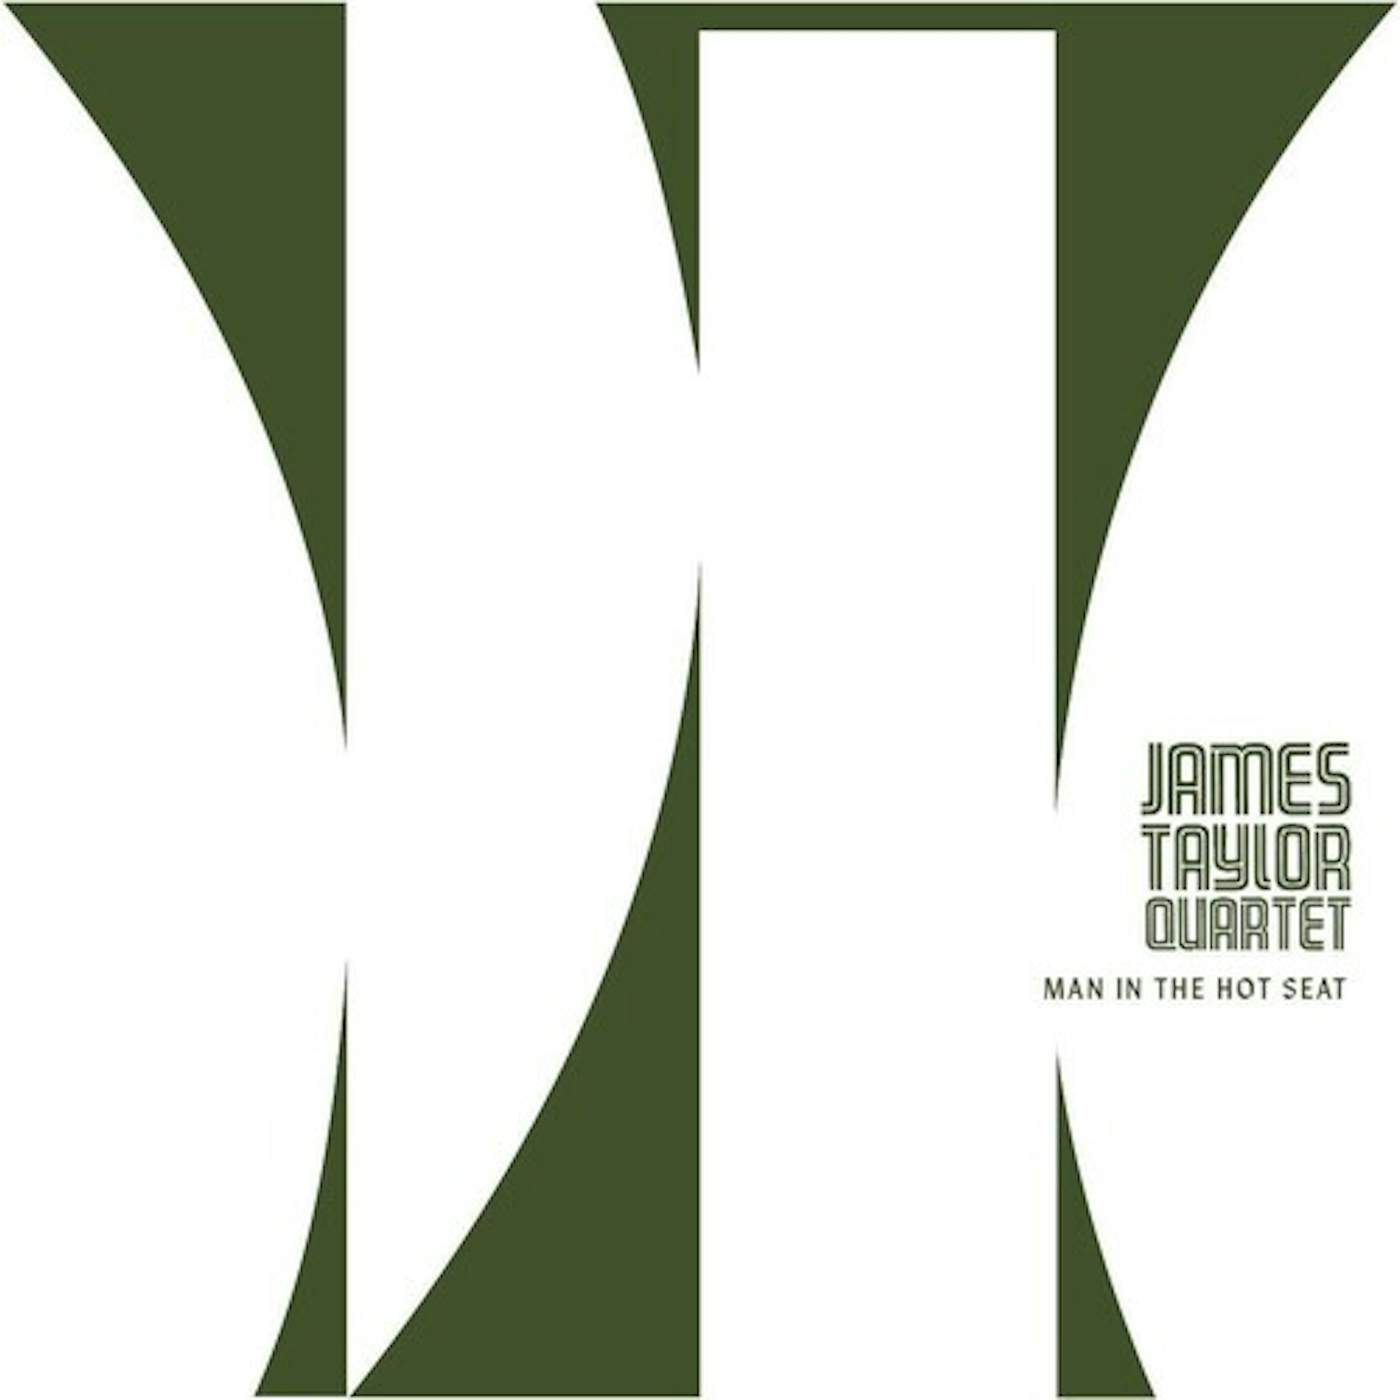 James Taylor Quartet Man In The Hot Seat vinyl record